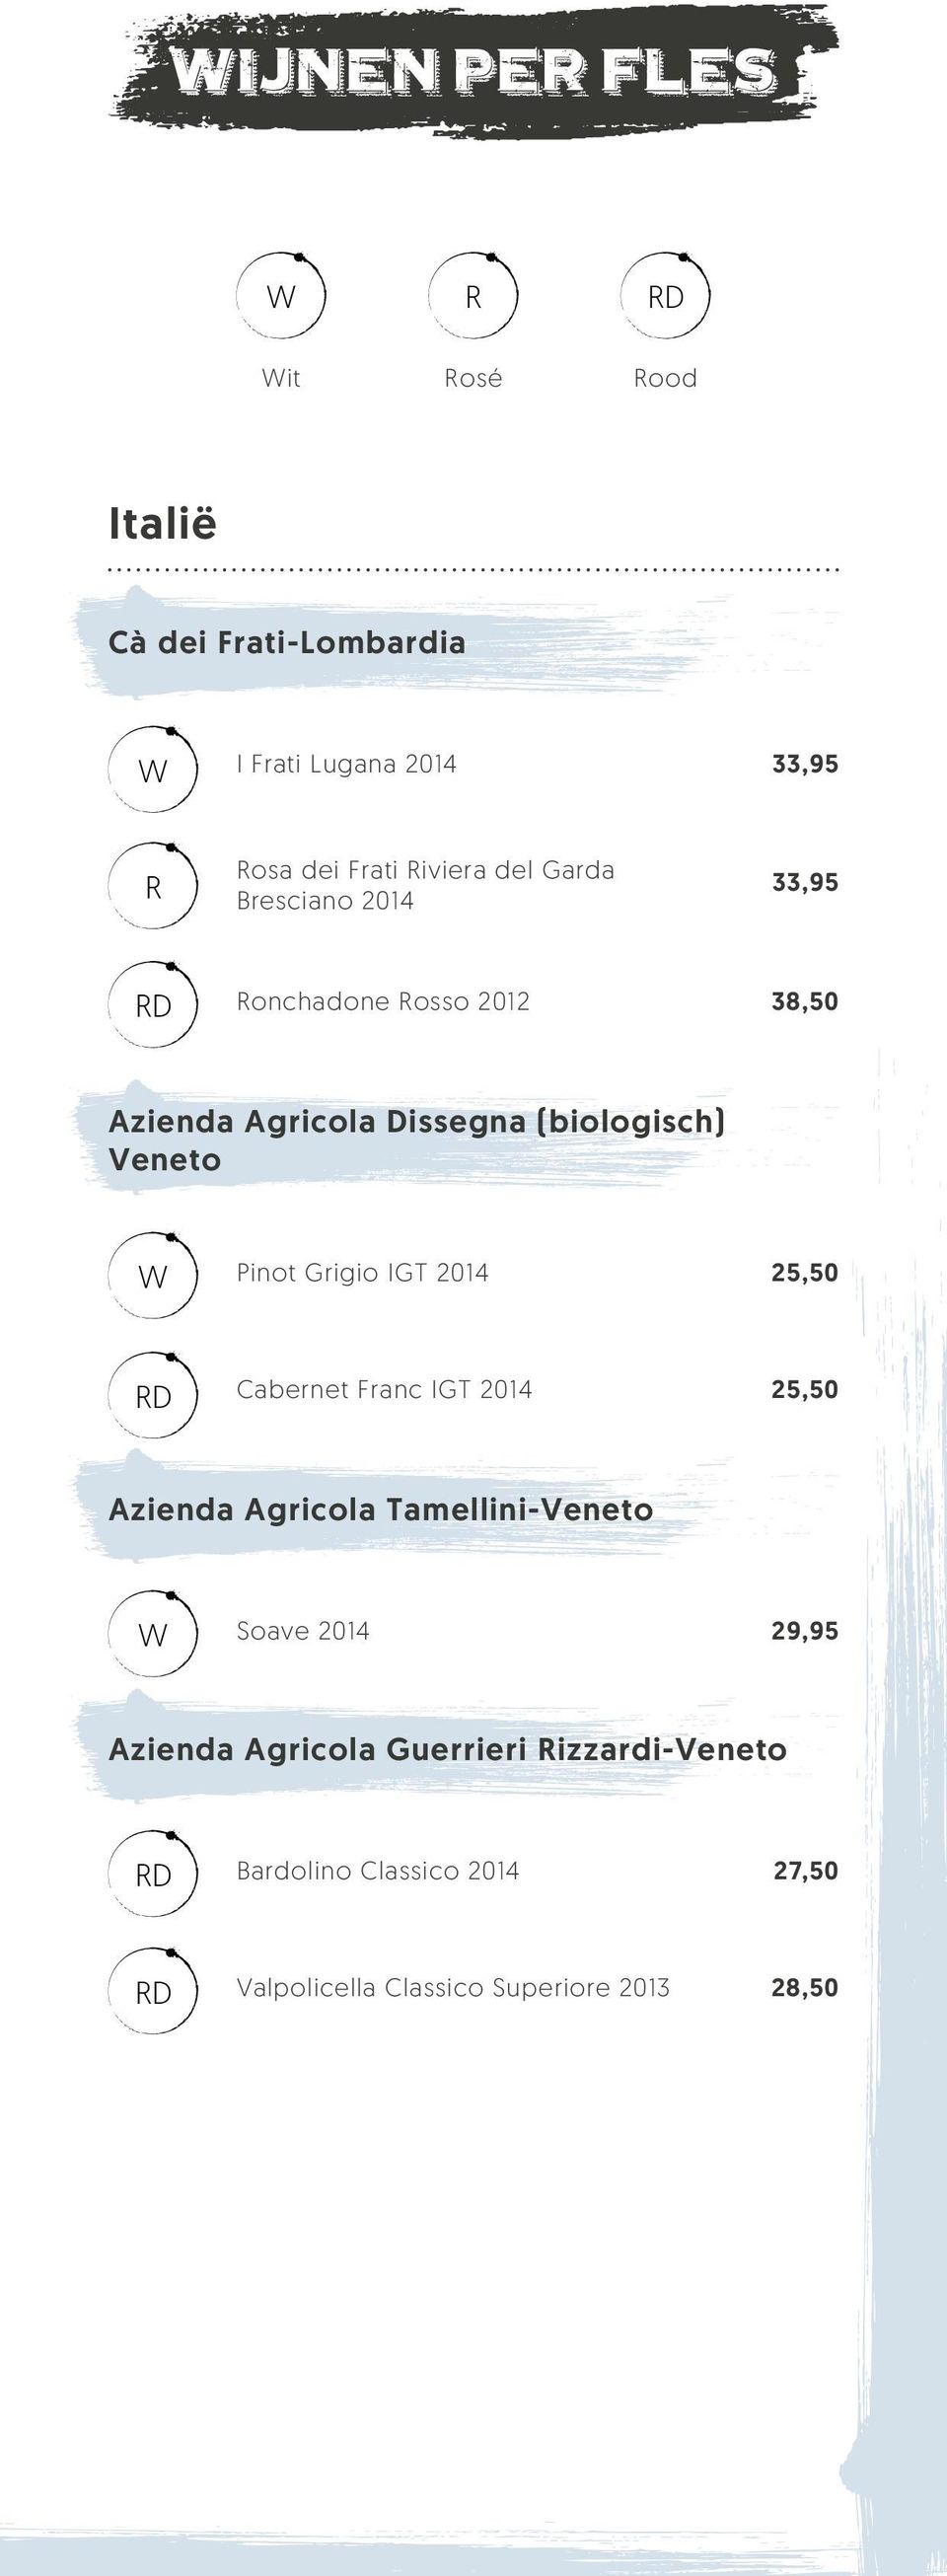 Grigio IGT 2014 25,50 Cabernet Franc IGT 2014 25,50 Azienda Agricola Tamellini-Veneto Soave 2014 29,95